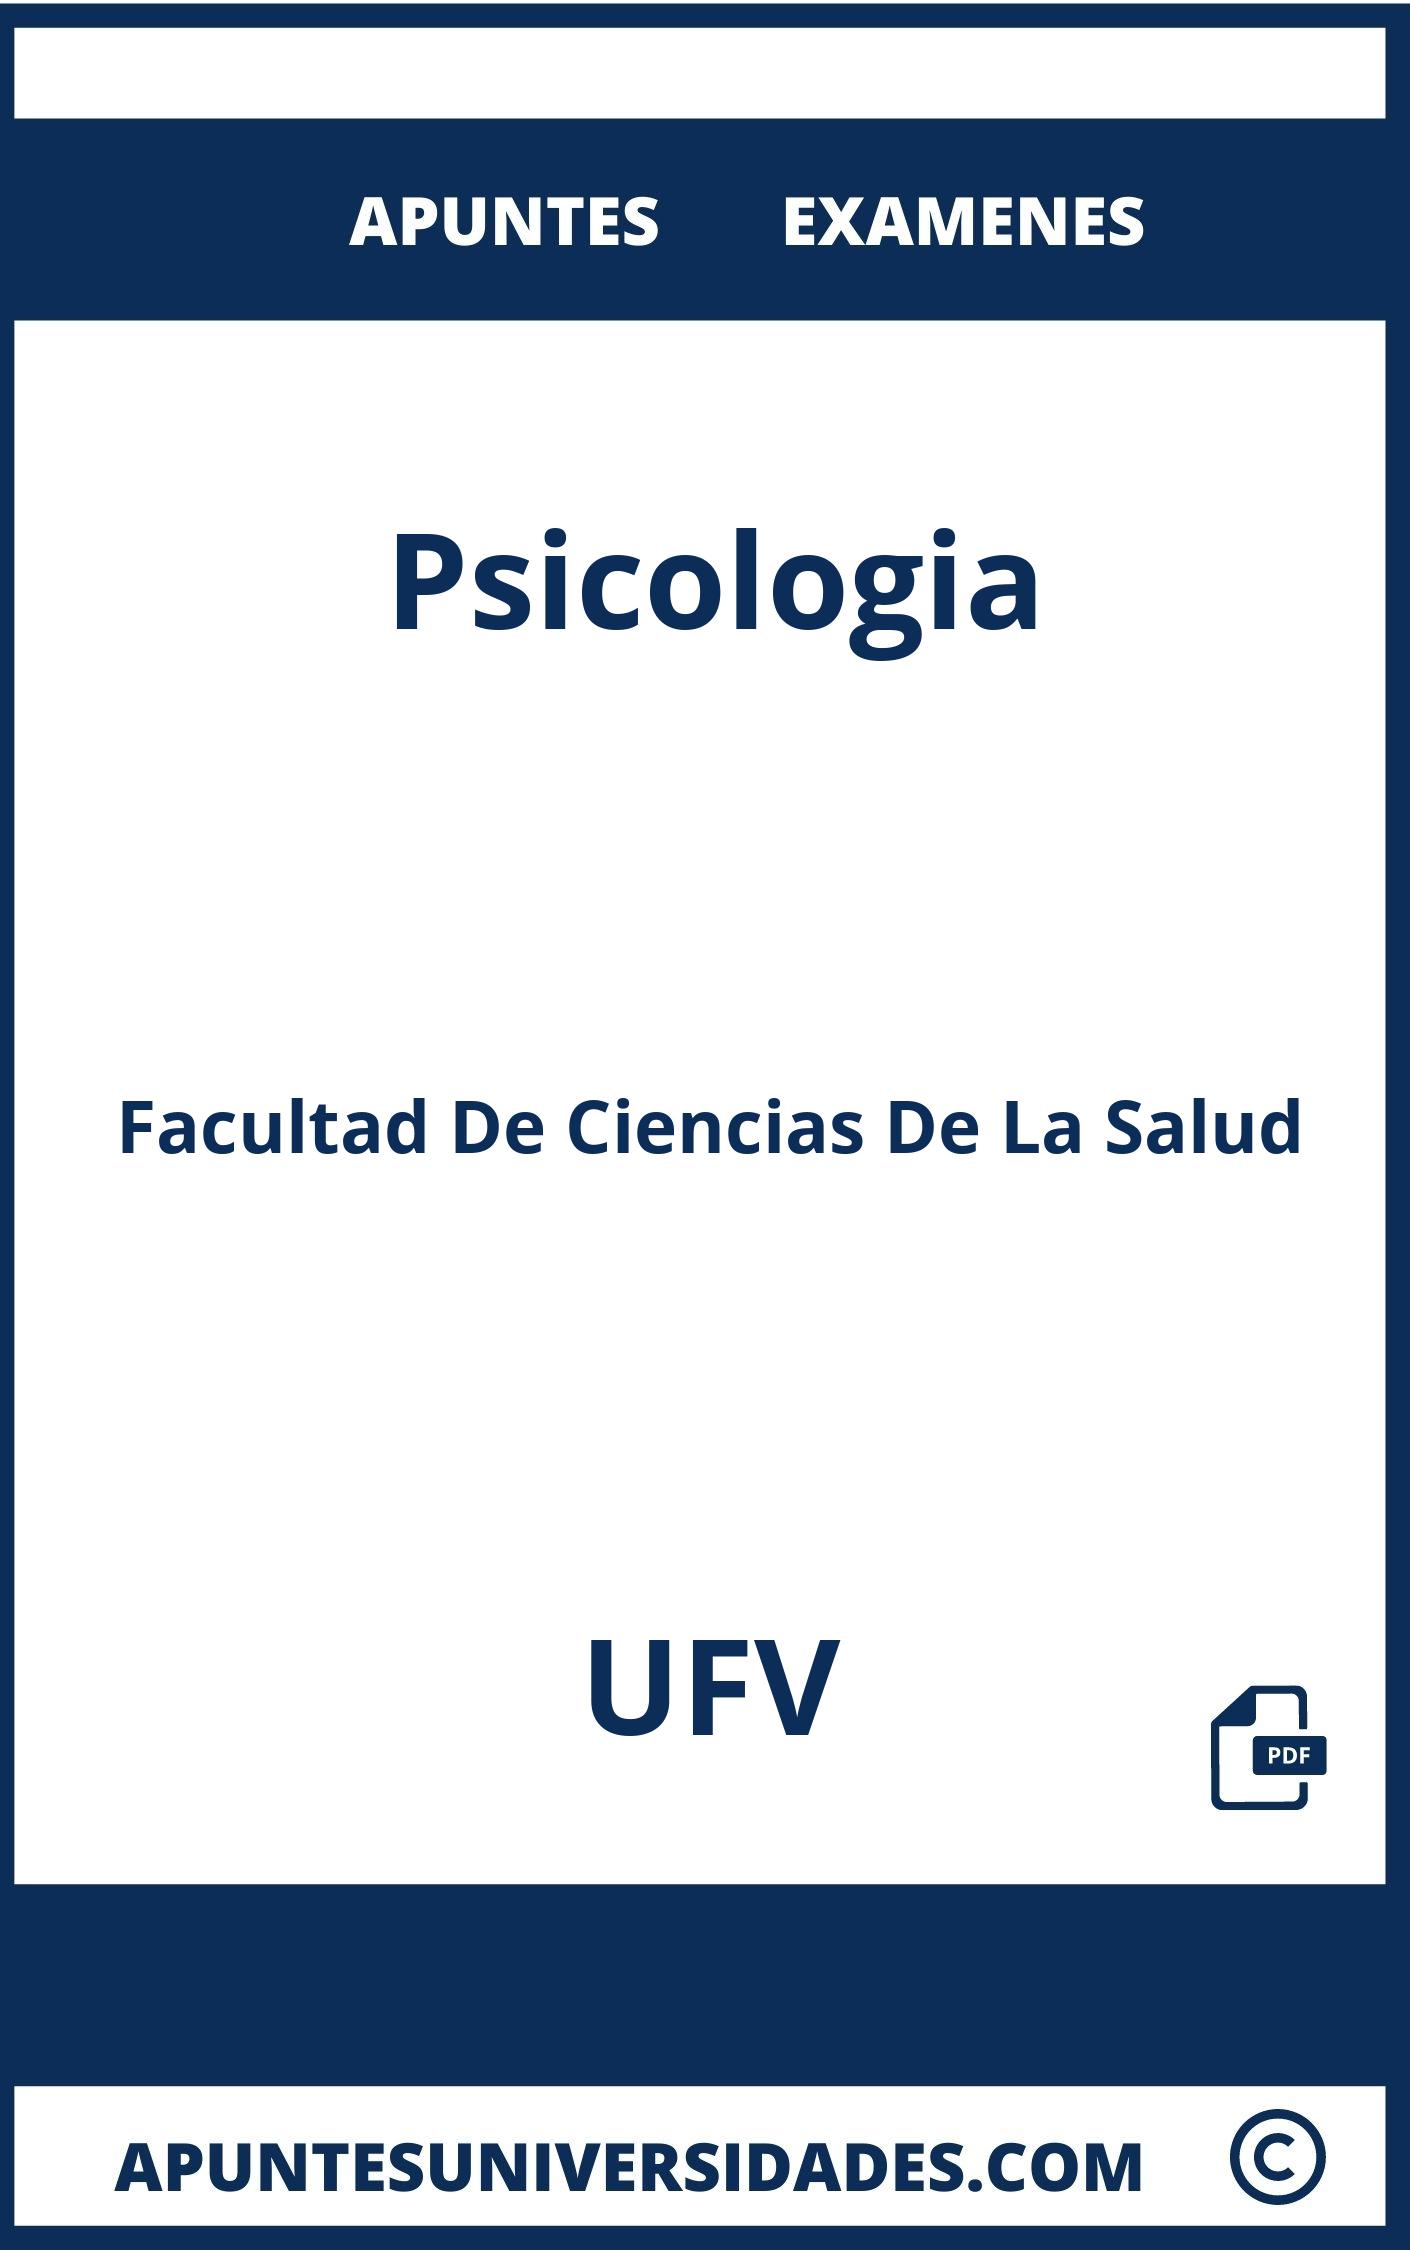 Apuntes Psicologia UFV y Examenes